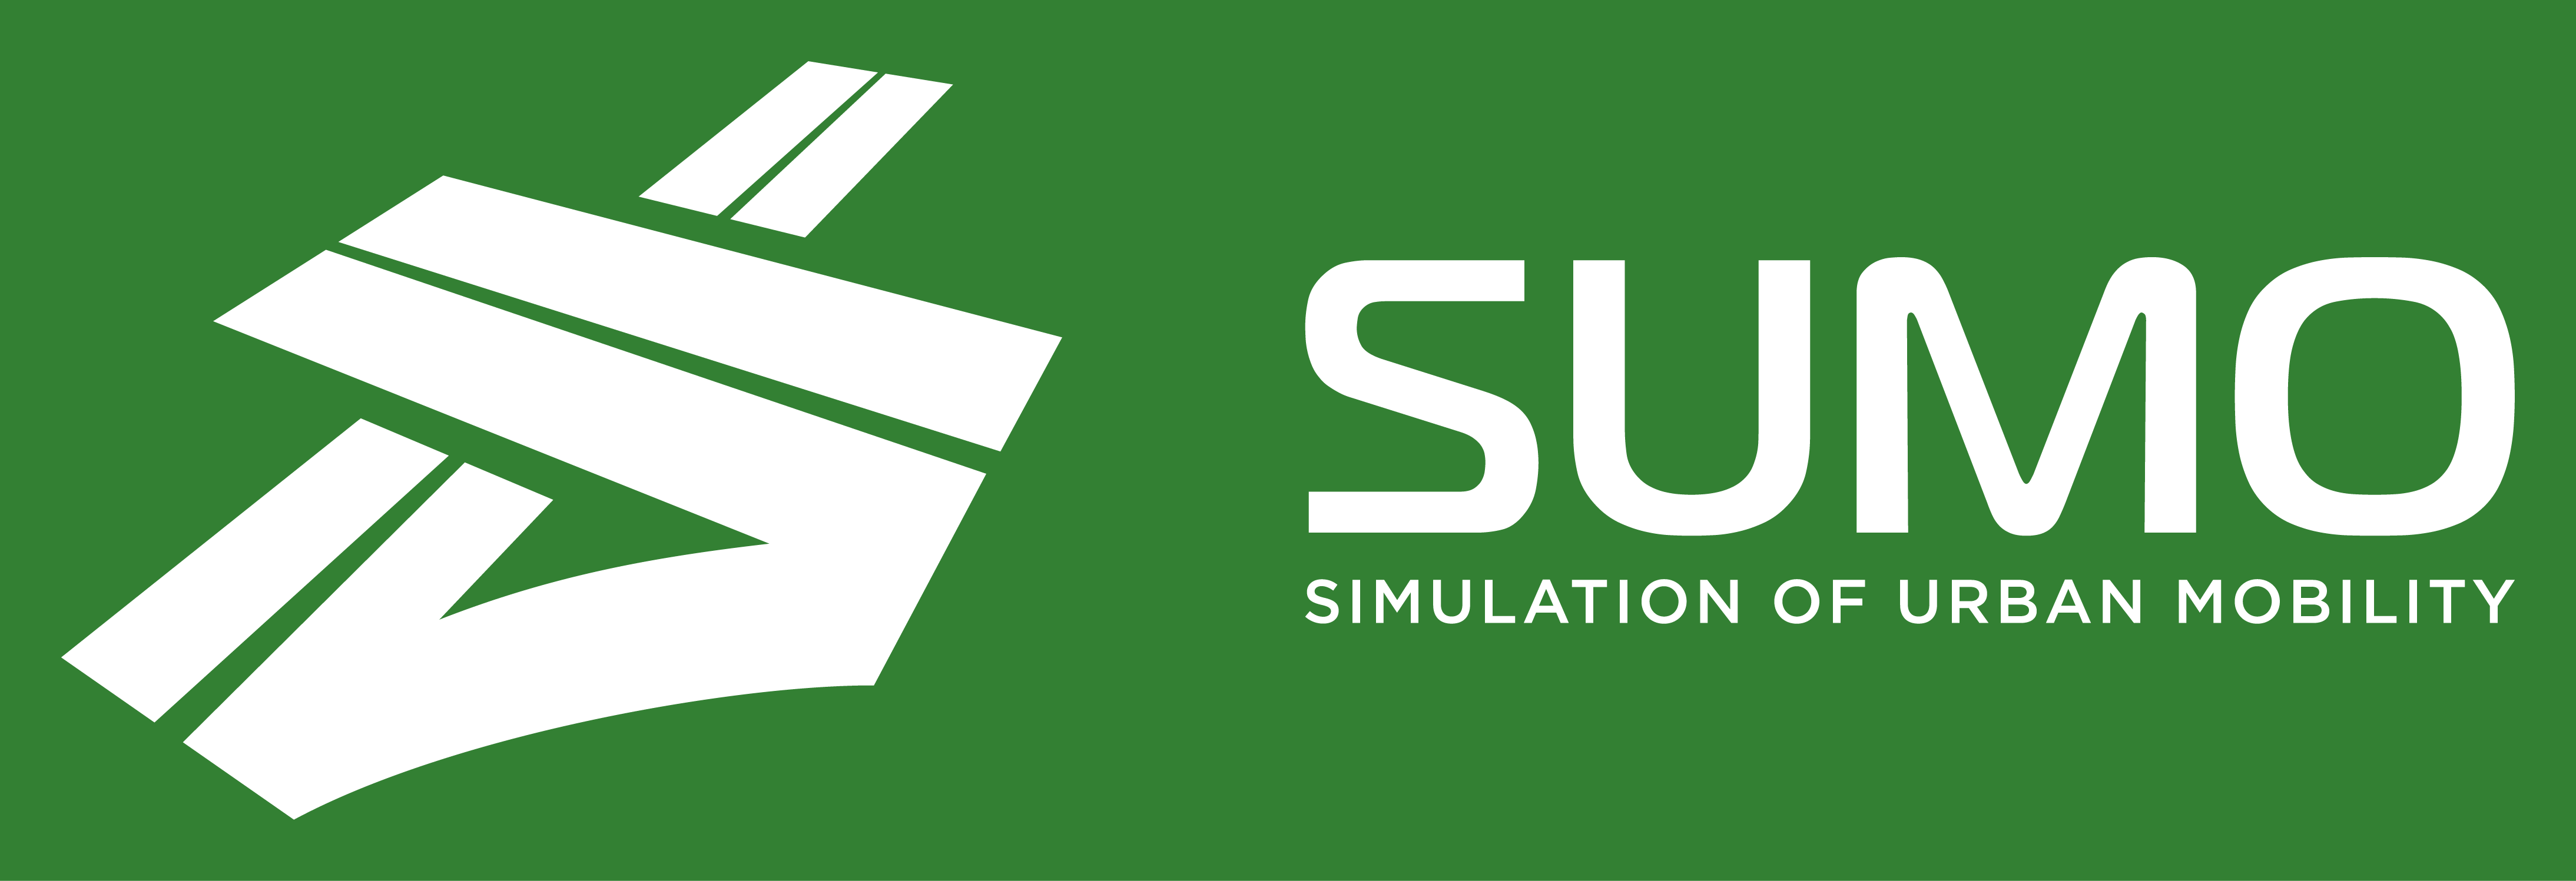 SUMO (Simulation of Urban Traffic) Logo